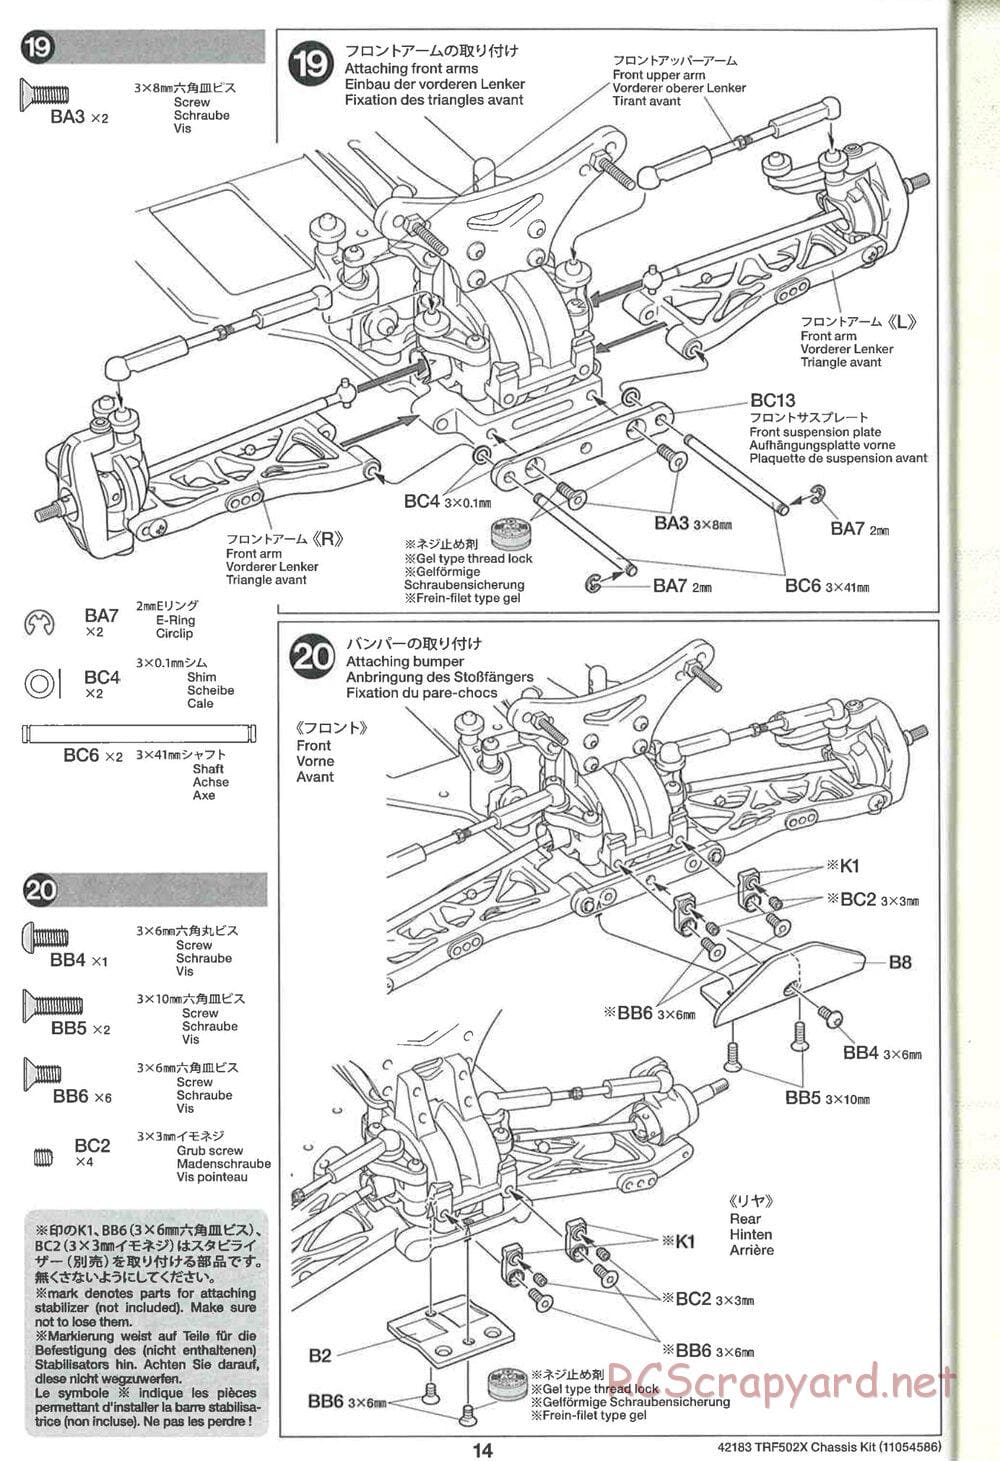 Tamiya - TRF502X Chassis - Manual - Page 14